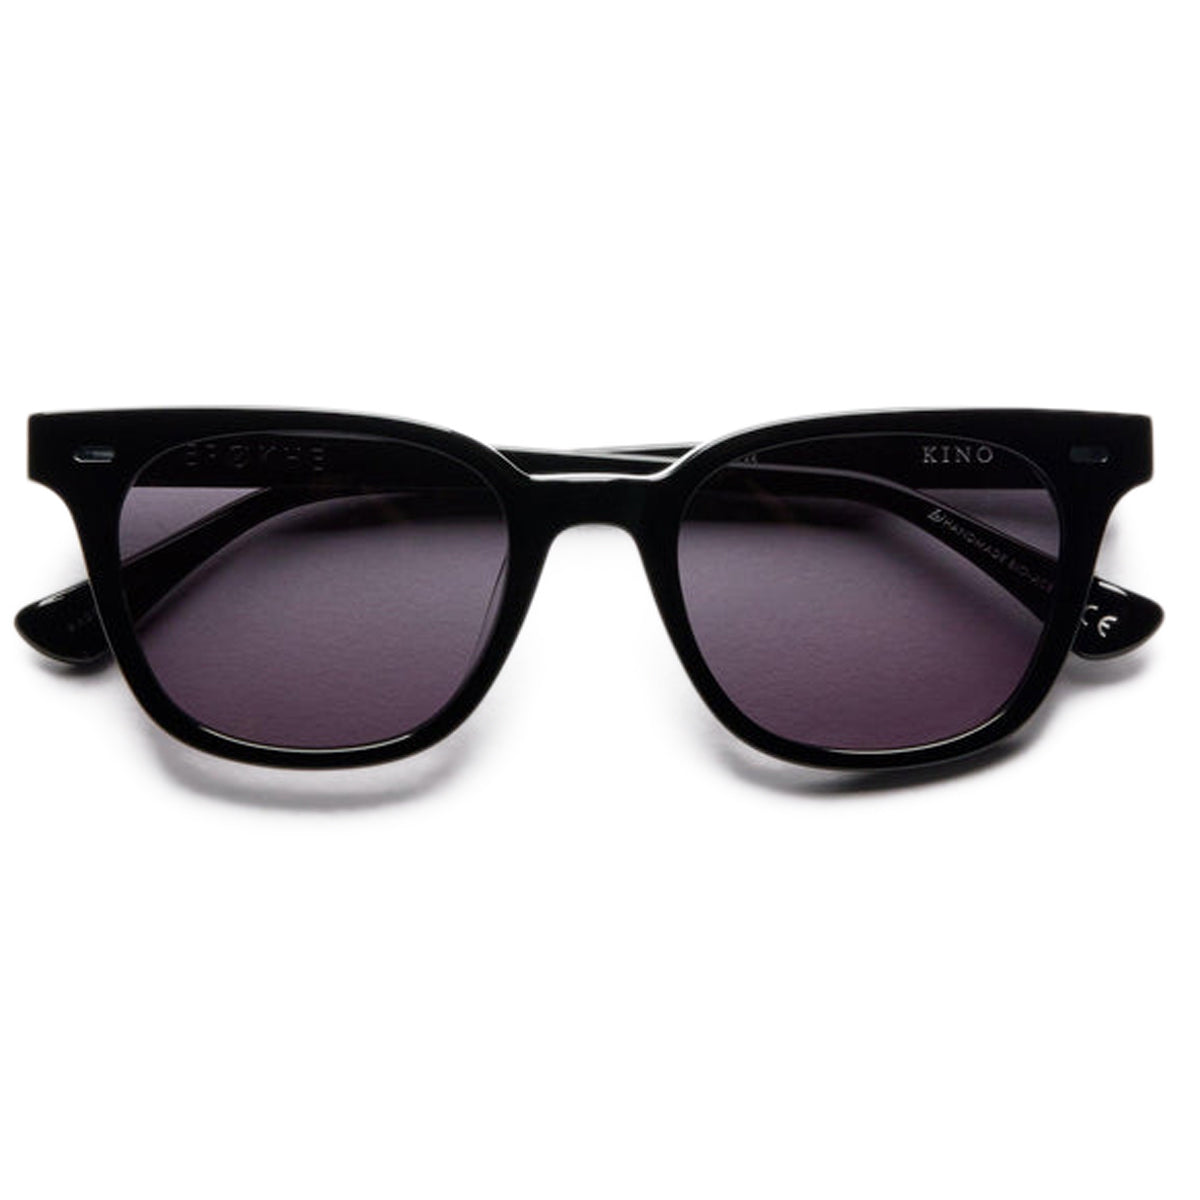 Epokhe Kino Sunglasses - Black Polished/Black image 2